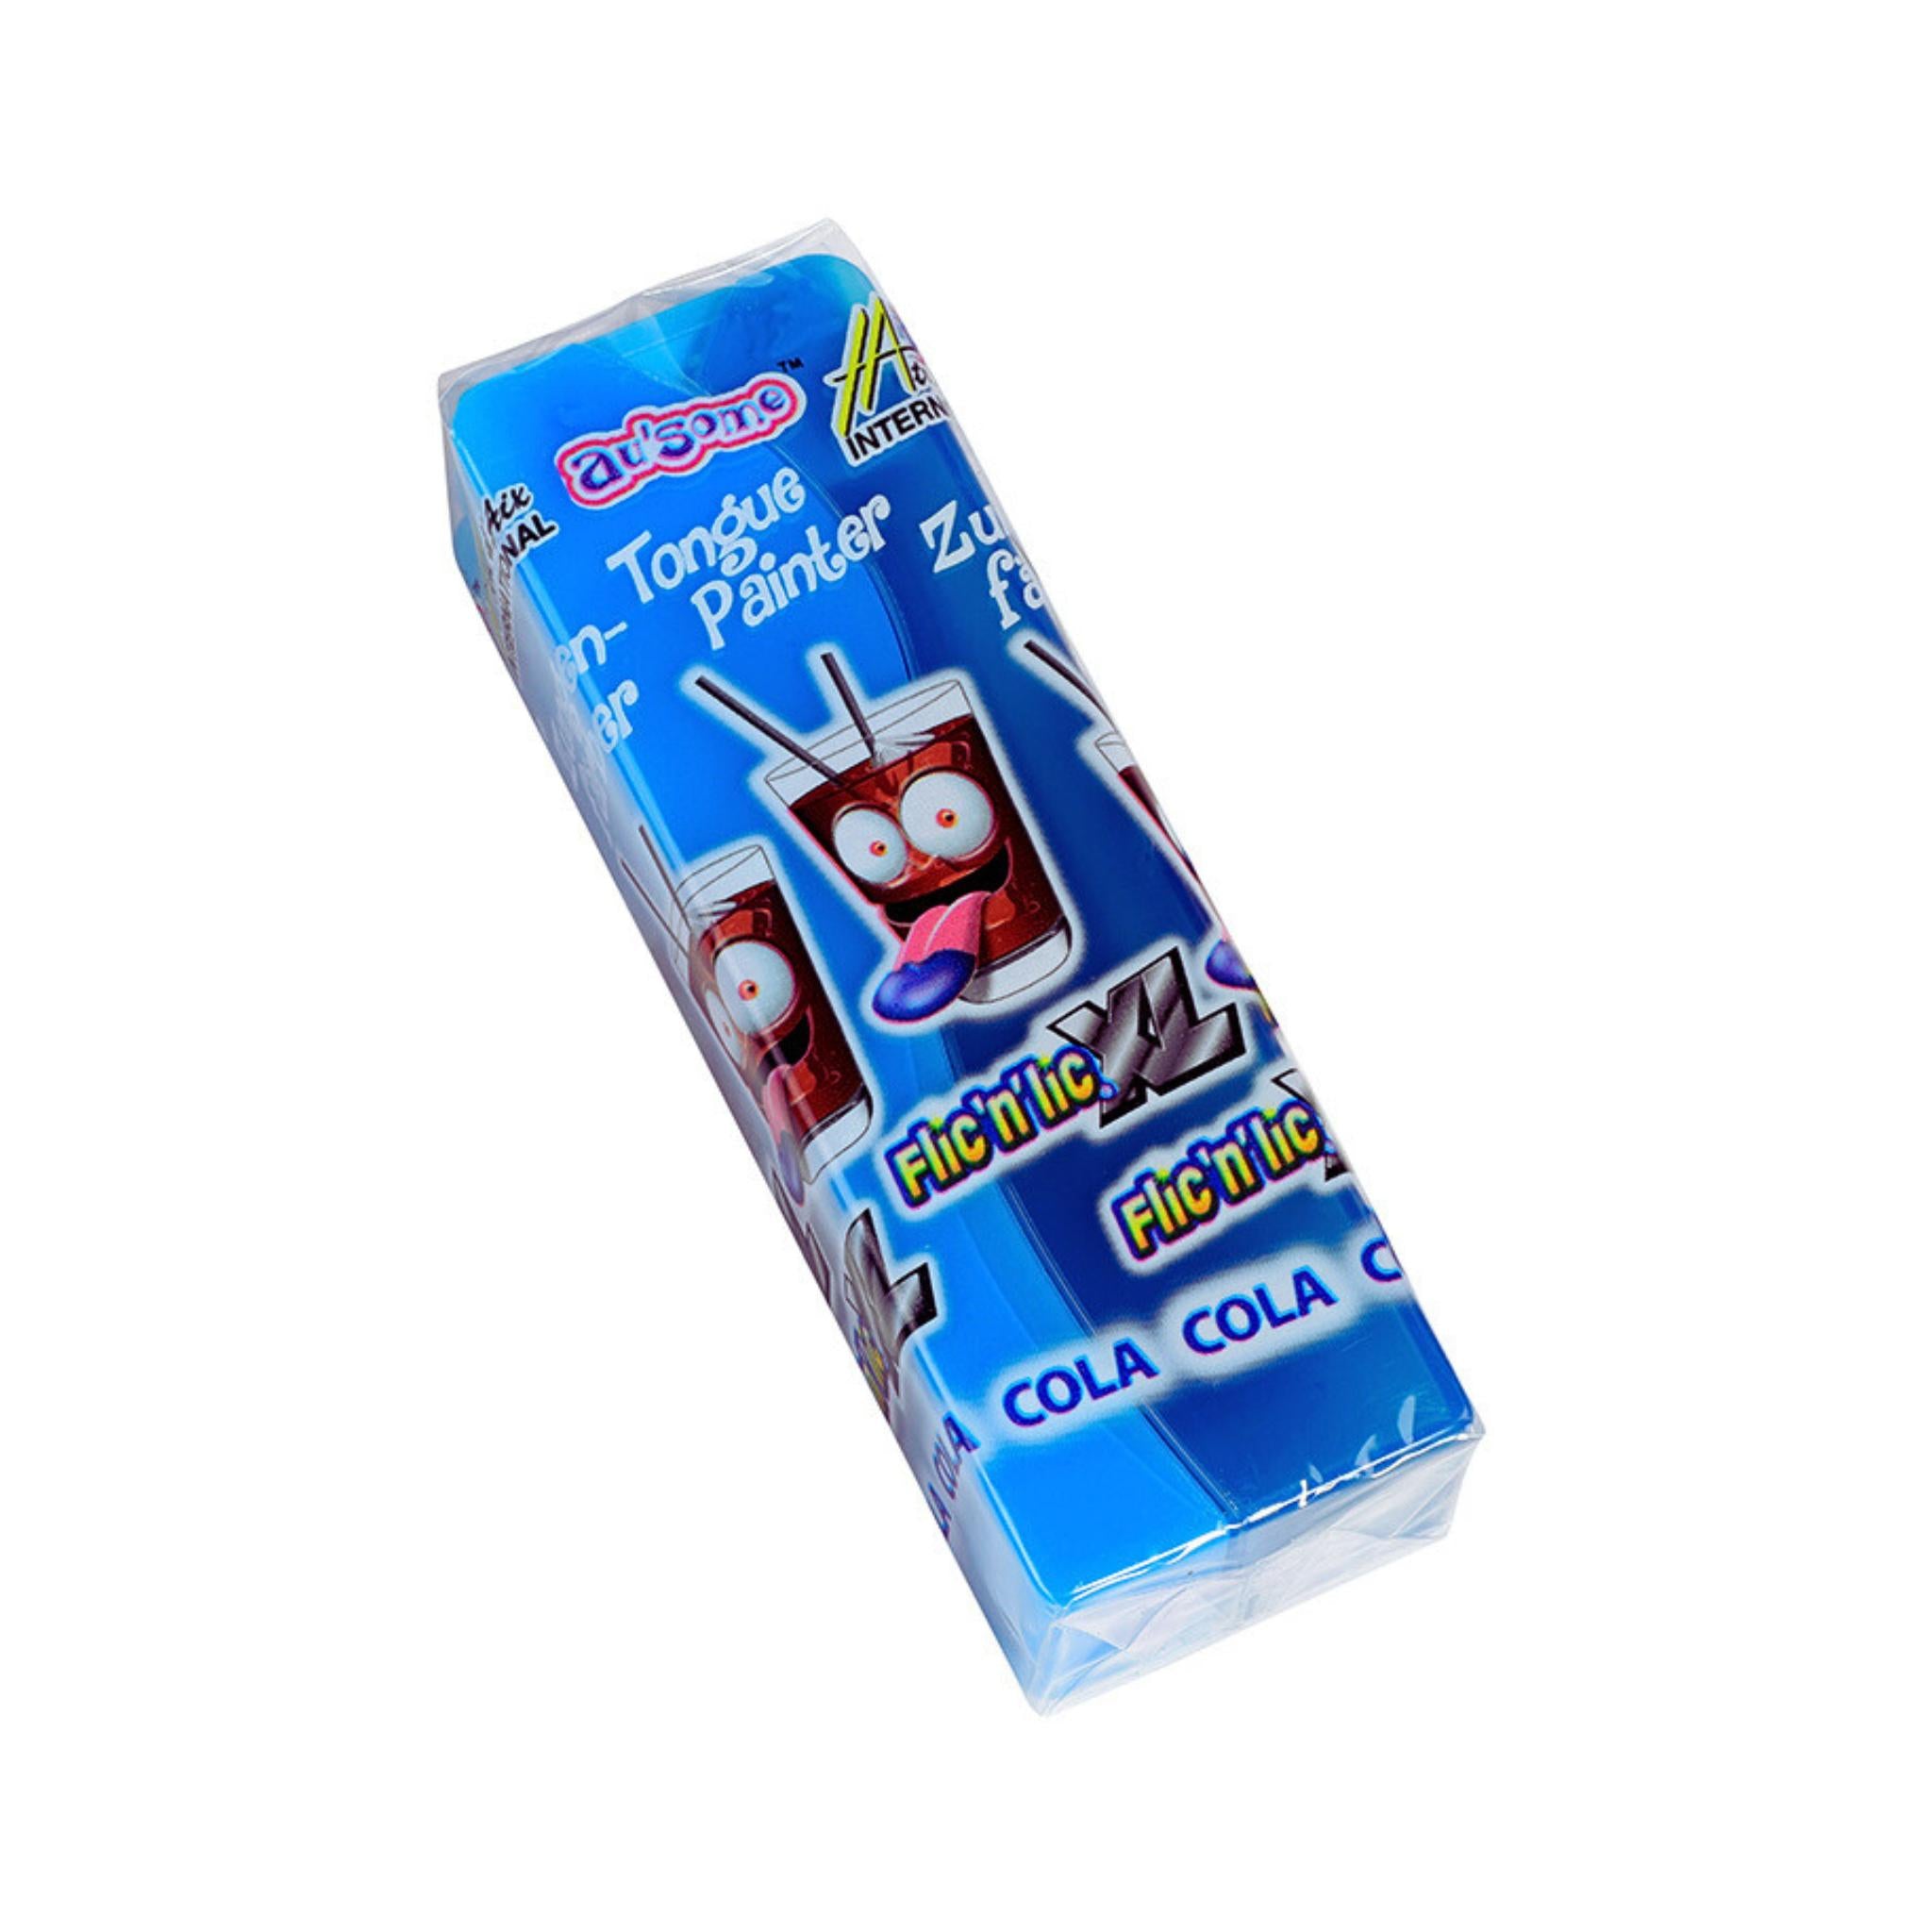 Flic'n'lic XL Cola Tongue Painter - 22g